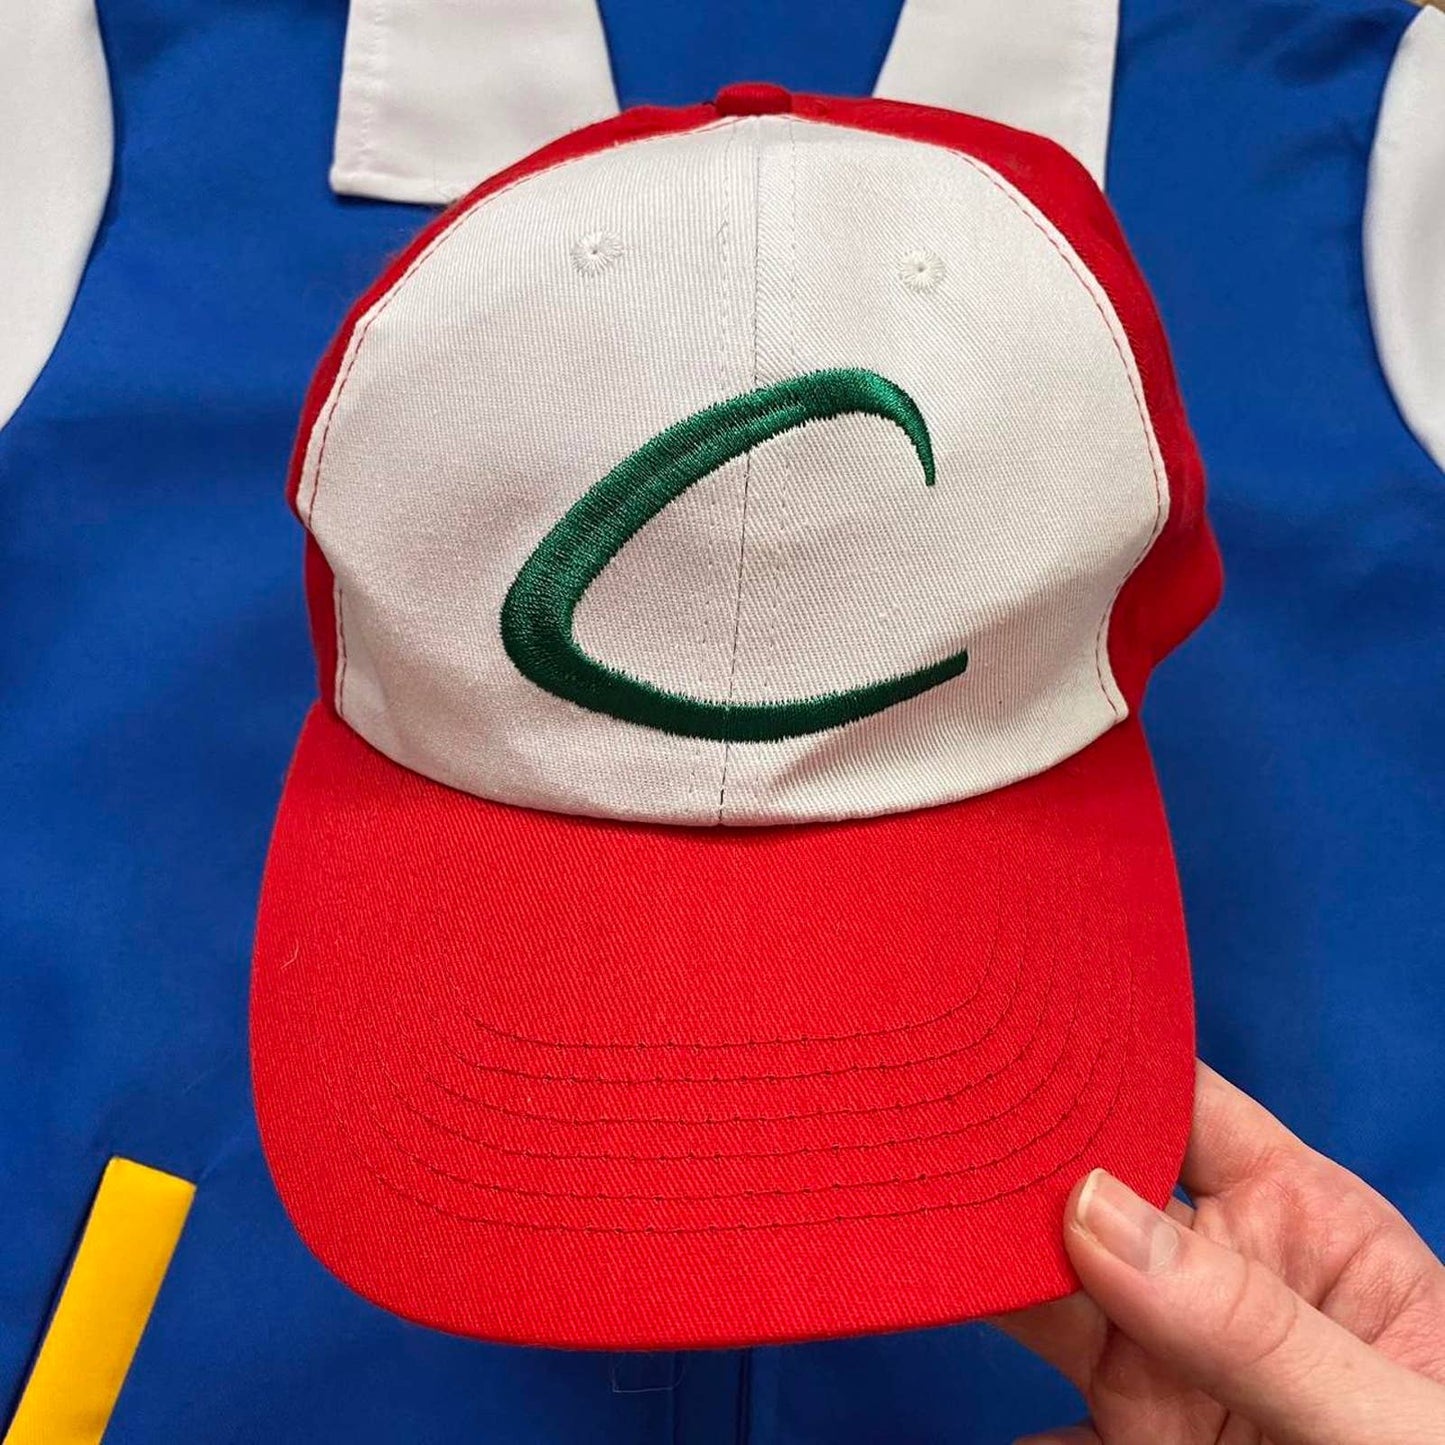 Secondhand Ash Ketchum Pokémon Costume Shirt & Cap, Size Medium